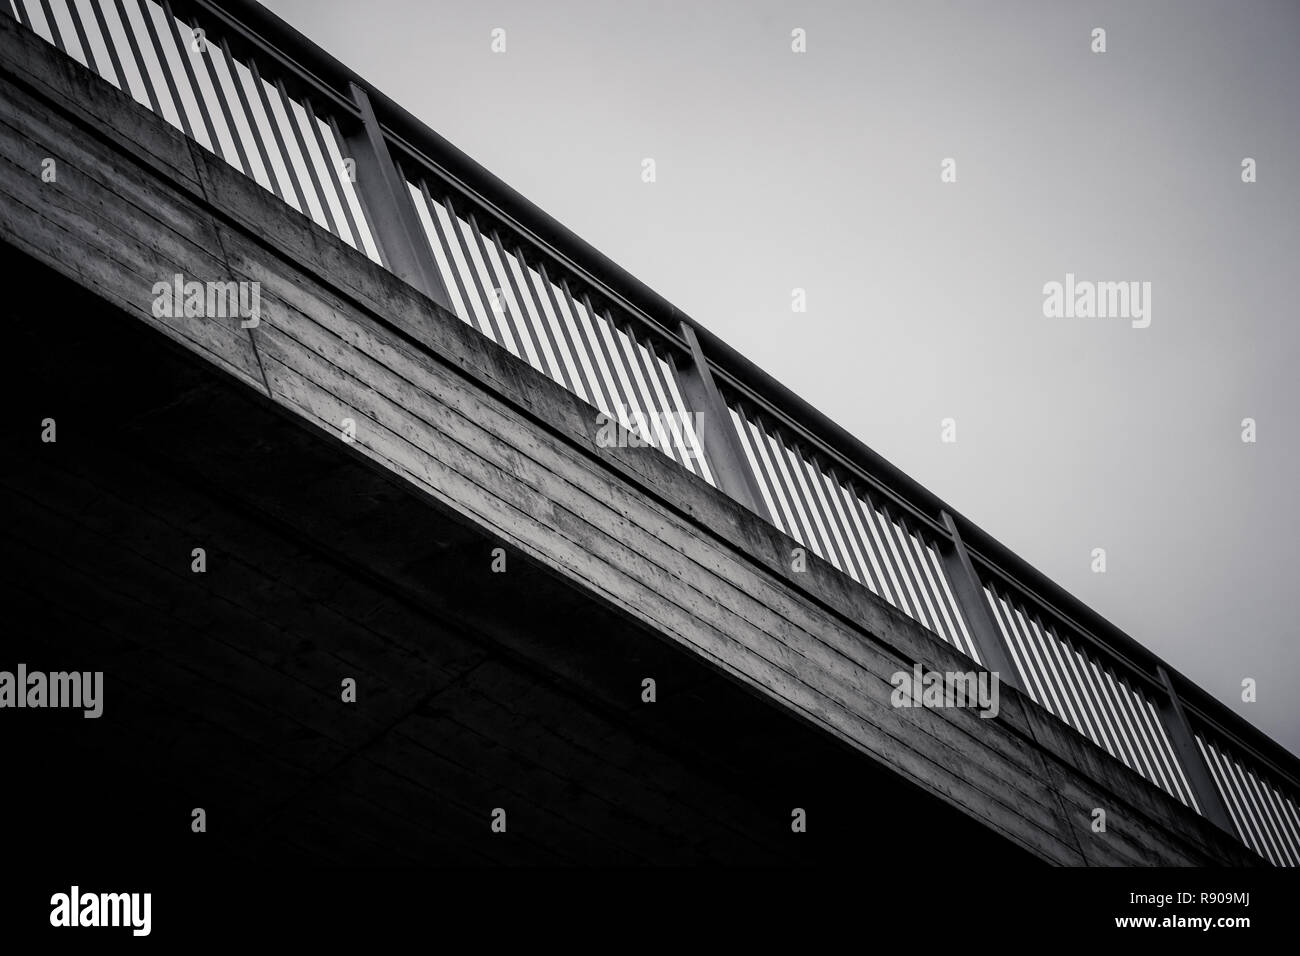 Bridge security railing in black and white Stock Photo